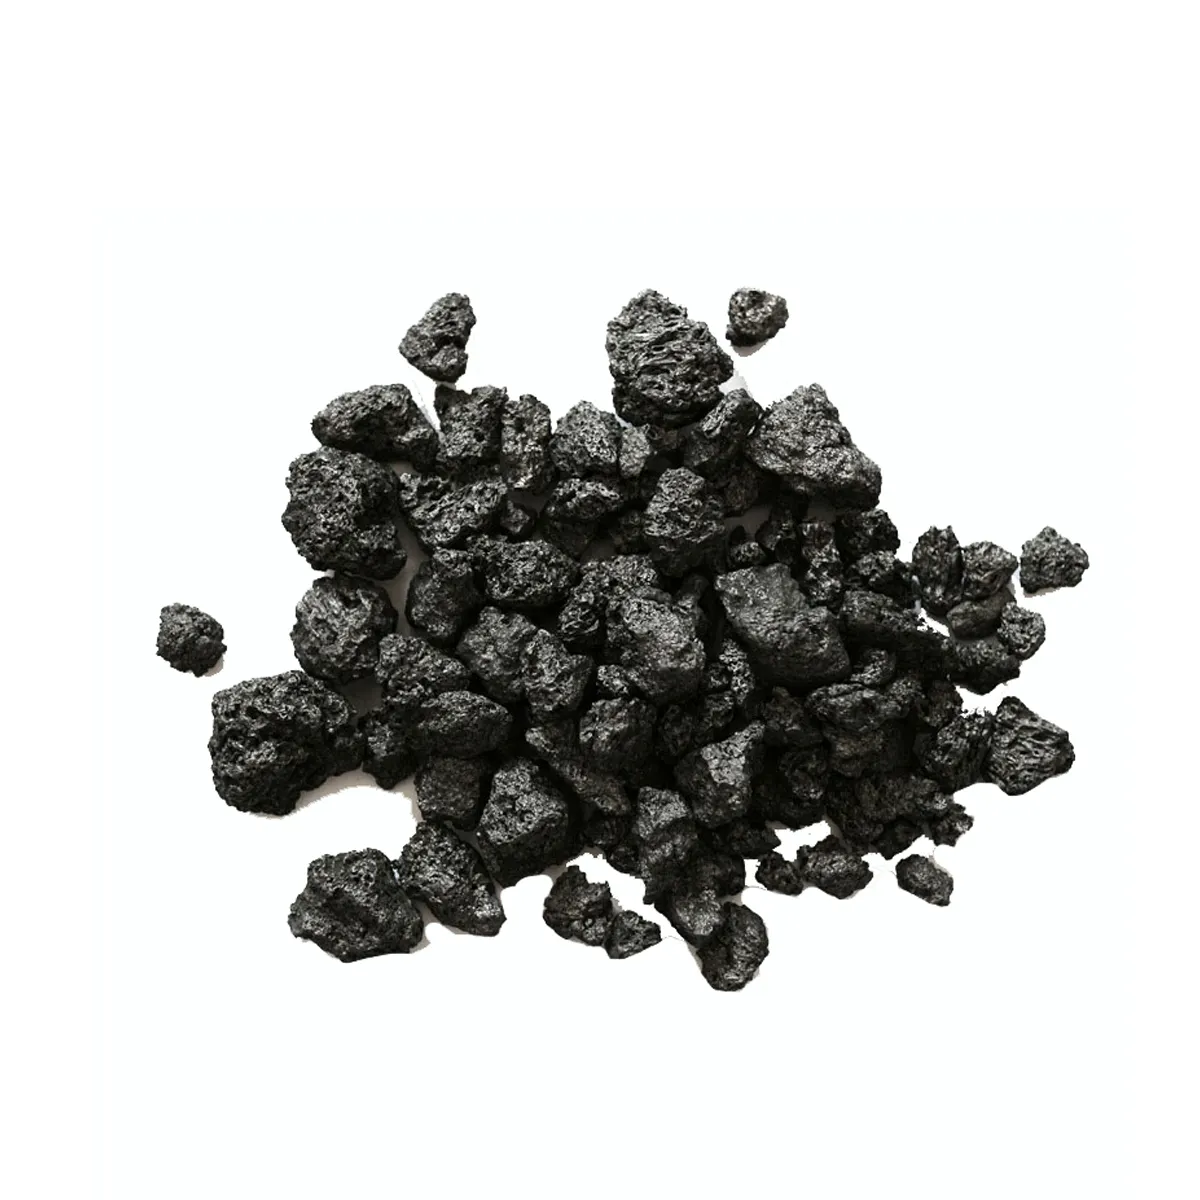 Recarburizer Raiser karbon CAC CPC GPC dikalracite batu bara dikalsinasi/grafit minyak bumi Coke